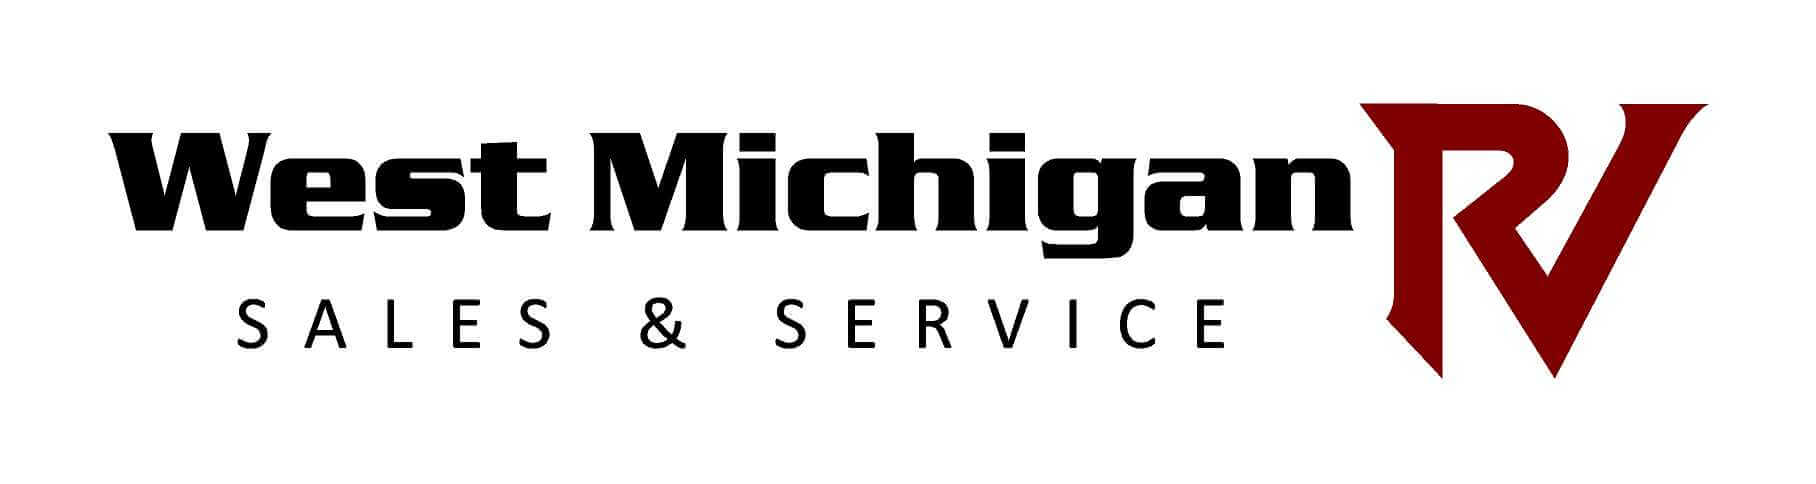 West Michigan RV Sales & Service